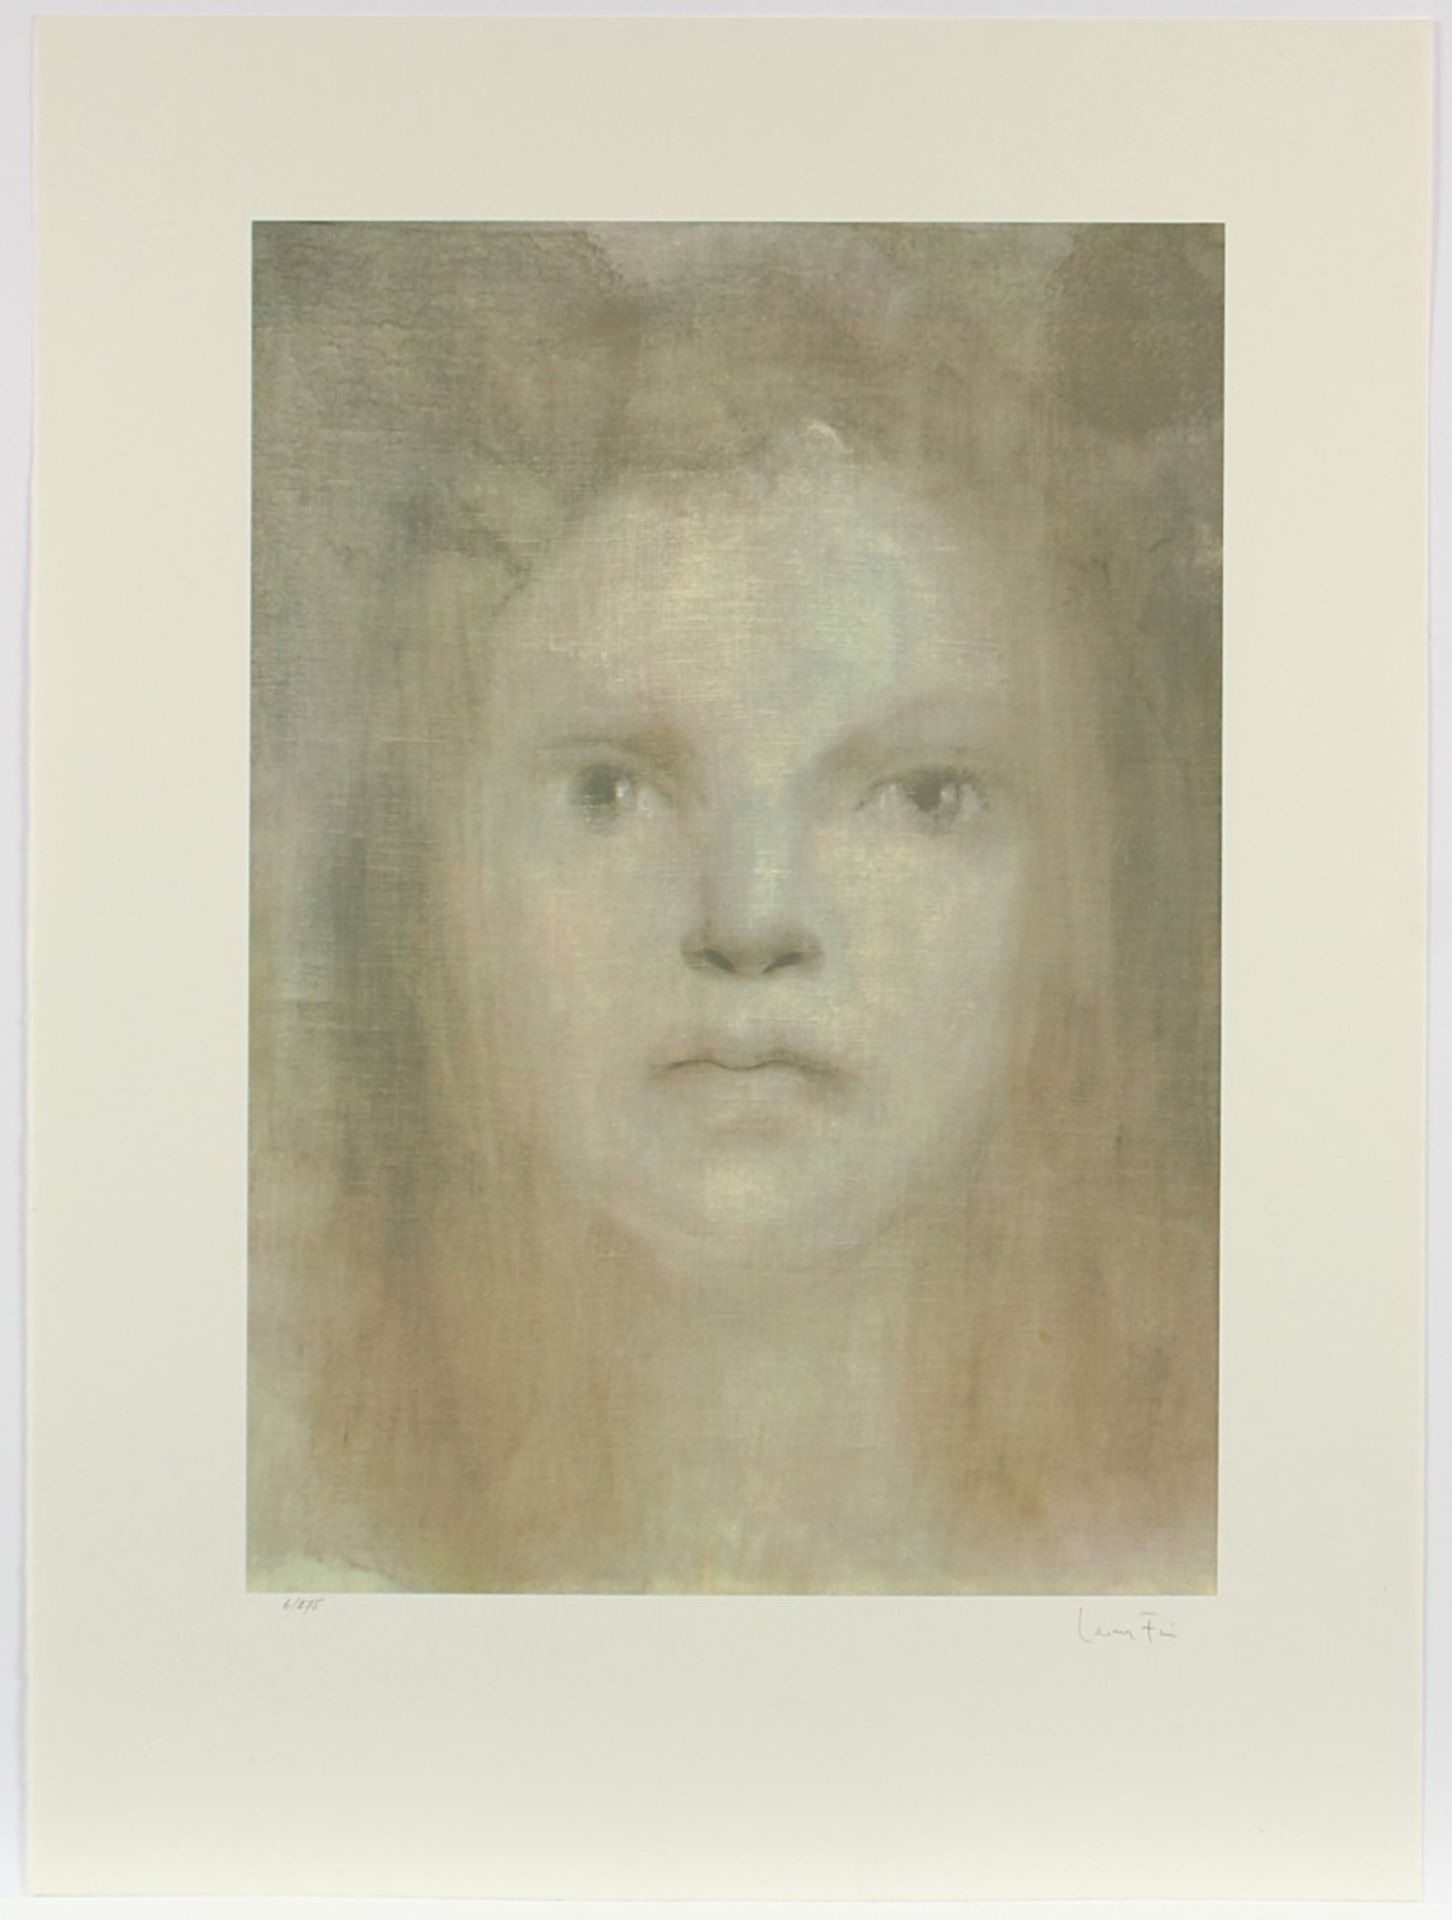 FINI, Leonor, "Tête de femme", Farbgrafik, 55 x 39, nummeriert 6/275, handsigniert, ungerahmt - Bild 2 aus 2